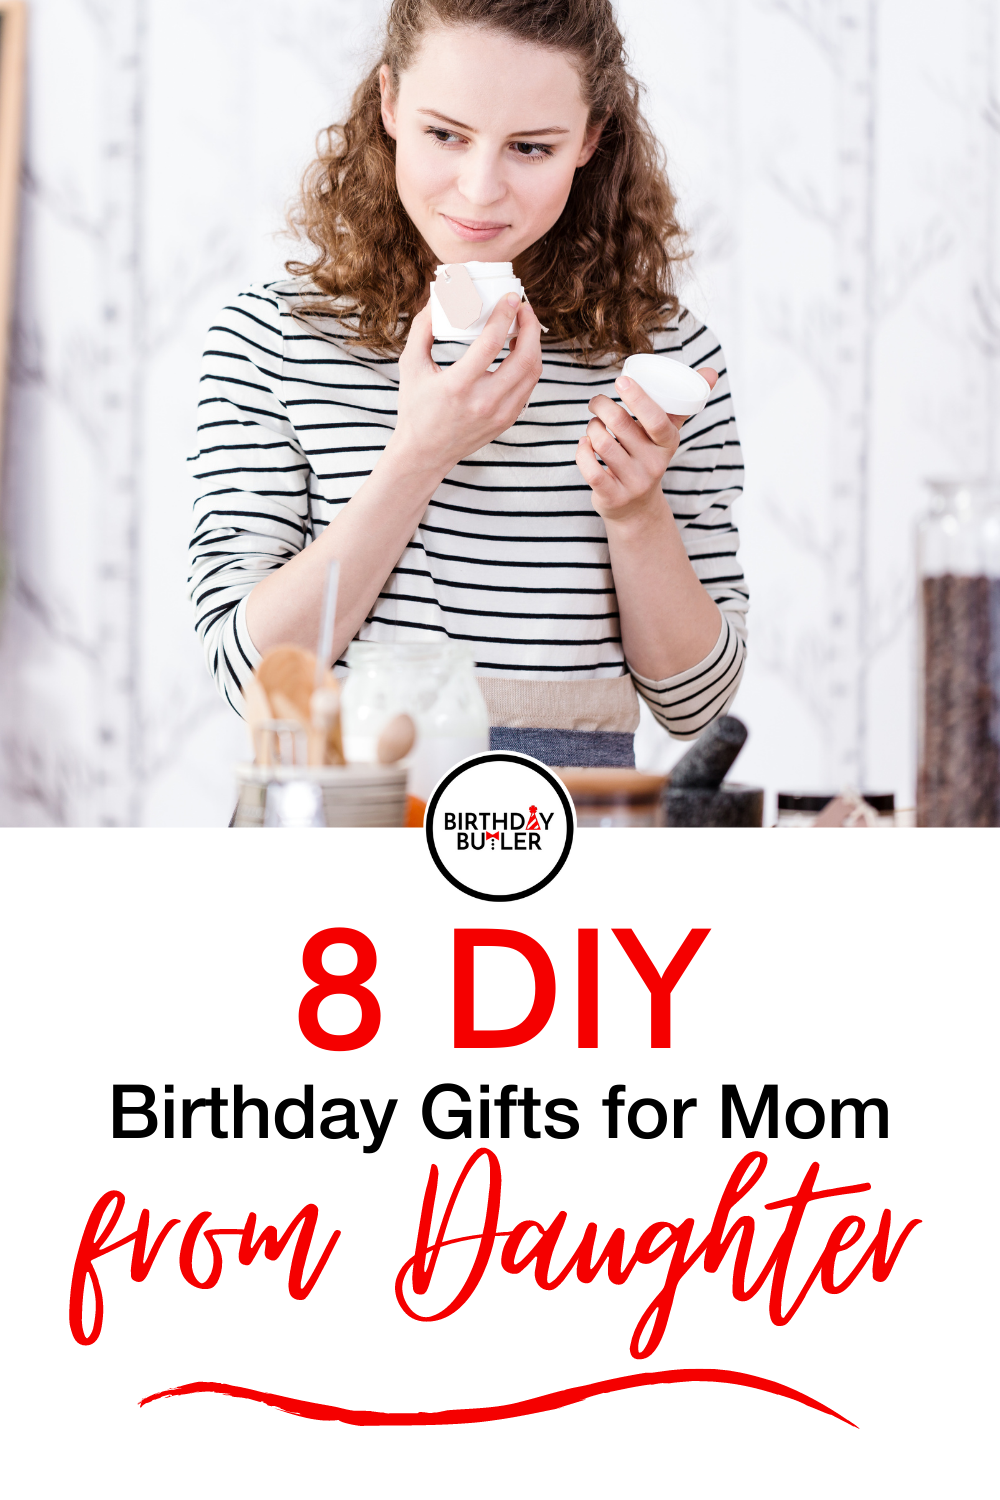 8 Happy birthday mom images ideas